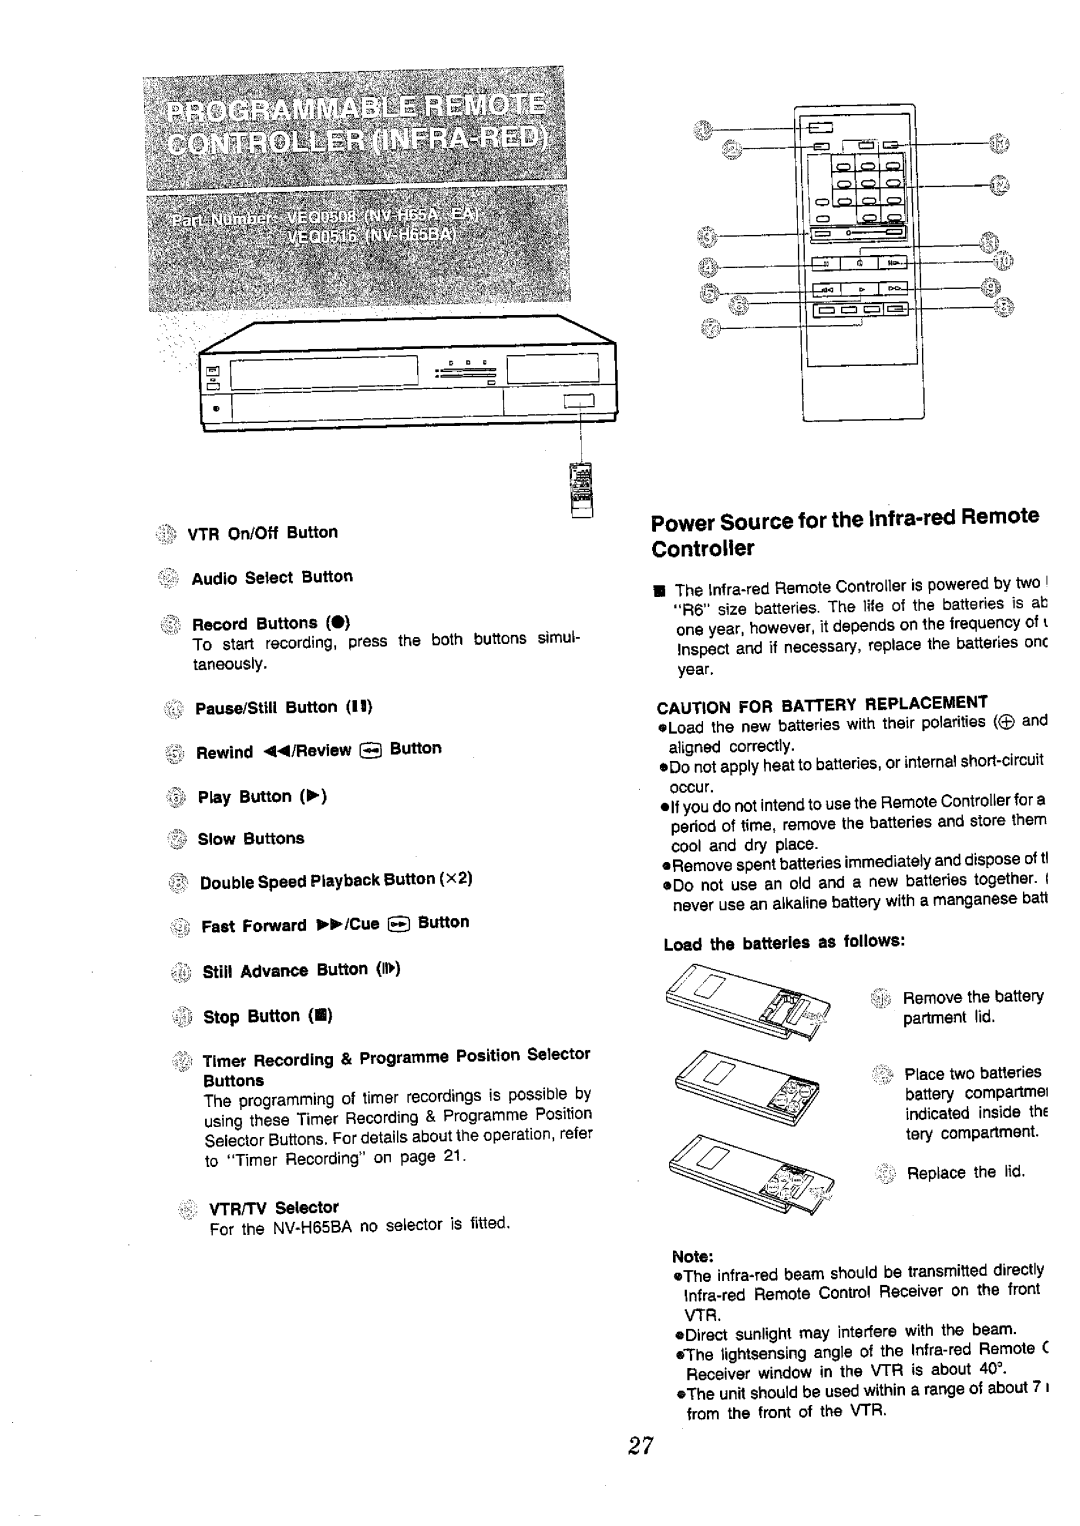 Panasonic NV-H65 Series manual 